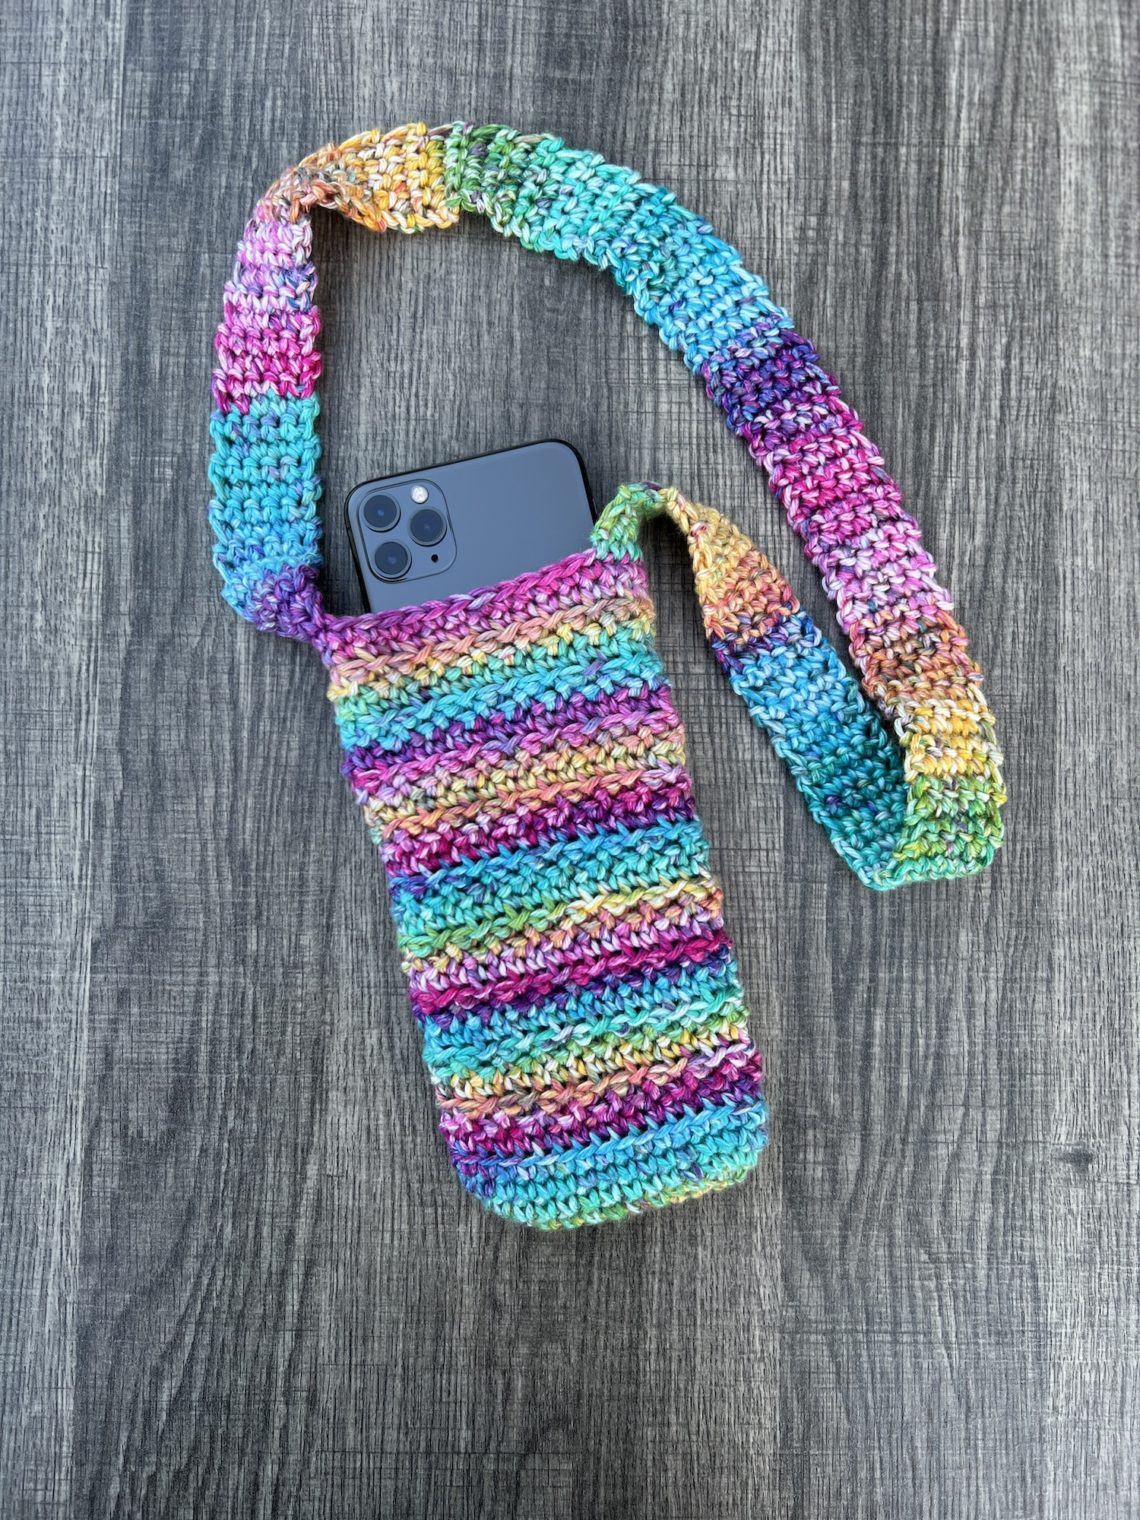 crochet mobile pouch // crochet hand bags // Crochet work / crochet bags  ideas - YouTube